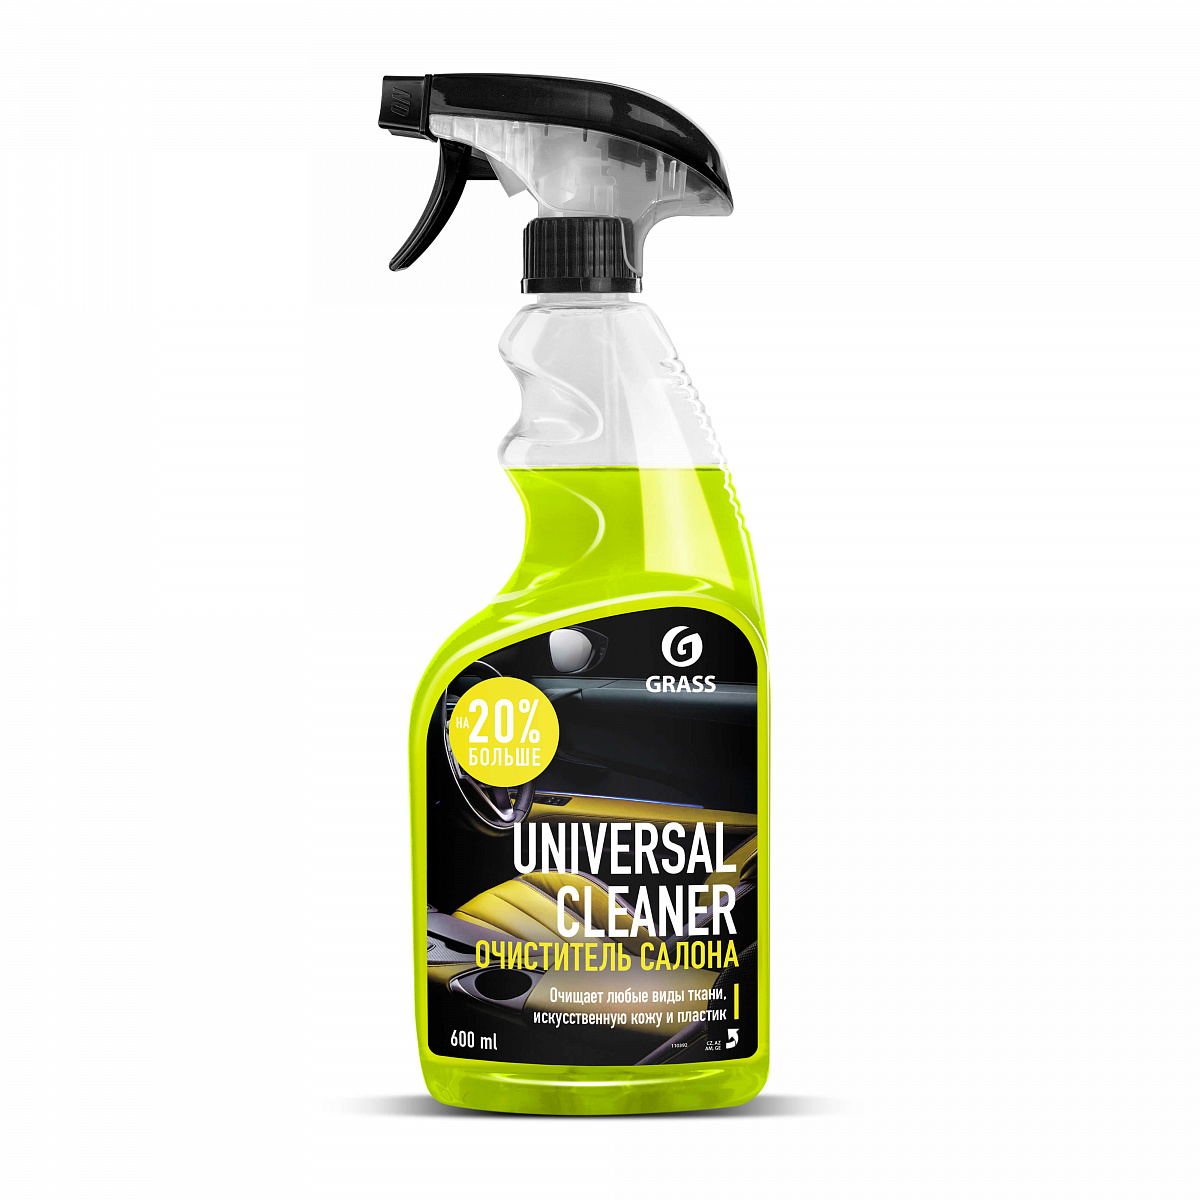 Очиститель салона Universal Cleaner professional 600мл GRASS ()